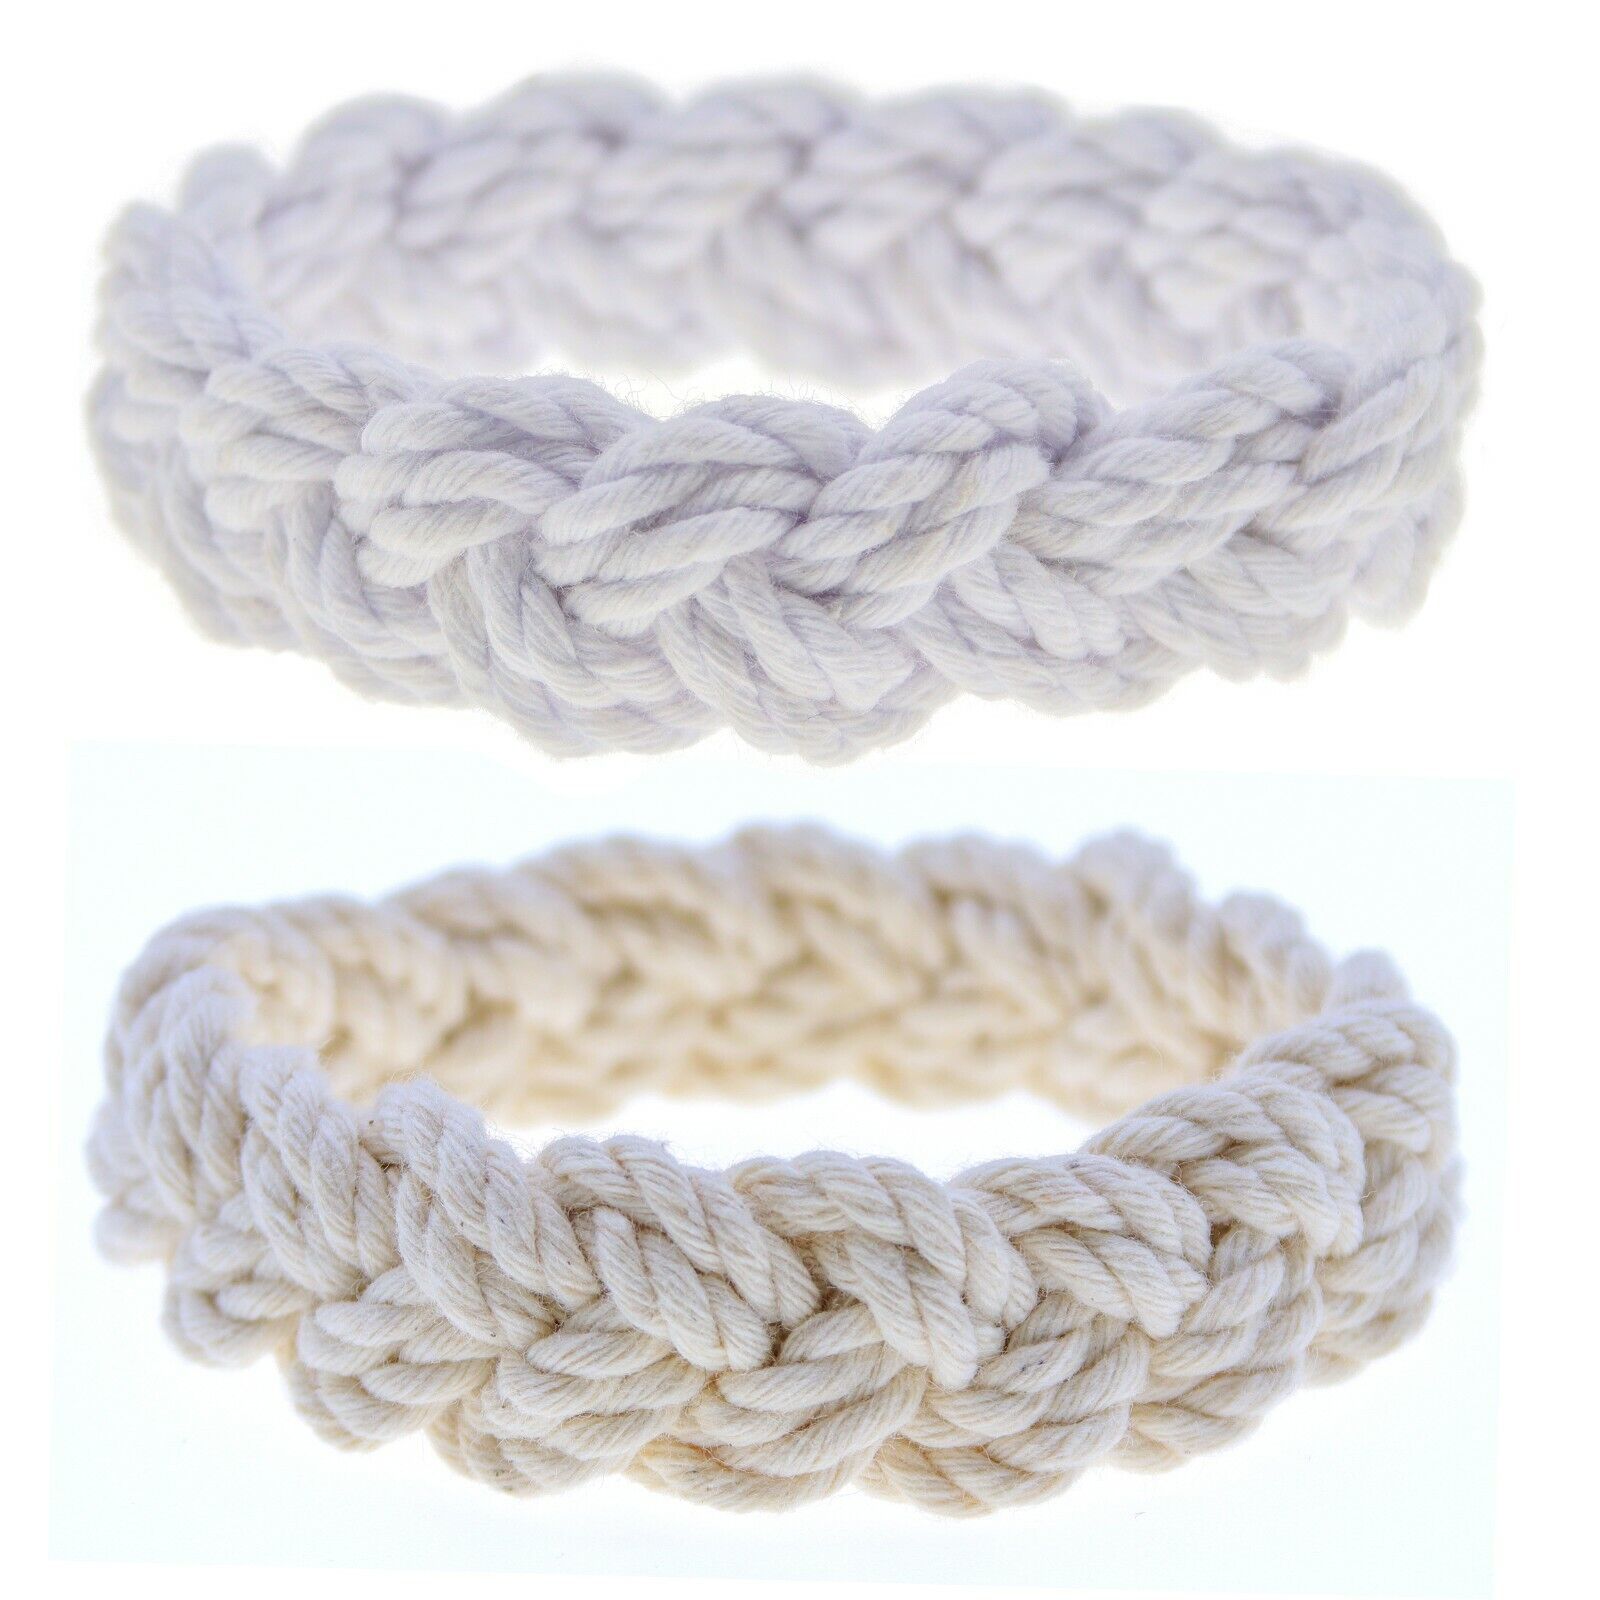 2 PCS Sailor Knot Bracelets, Nautical Knot Rope Bracelets